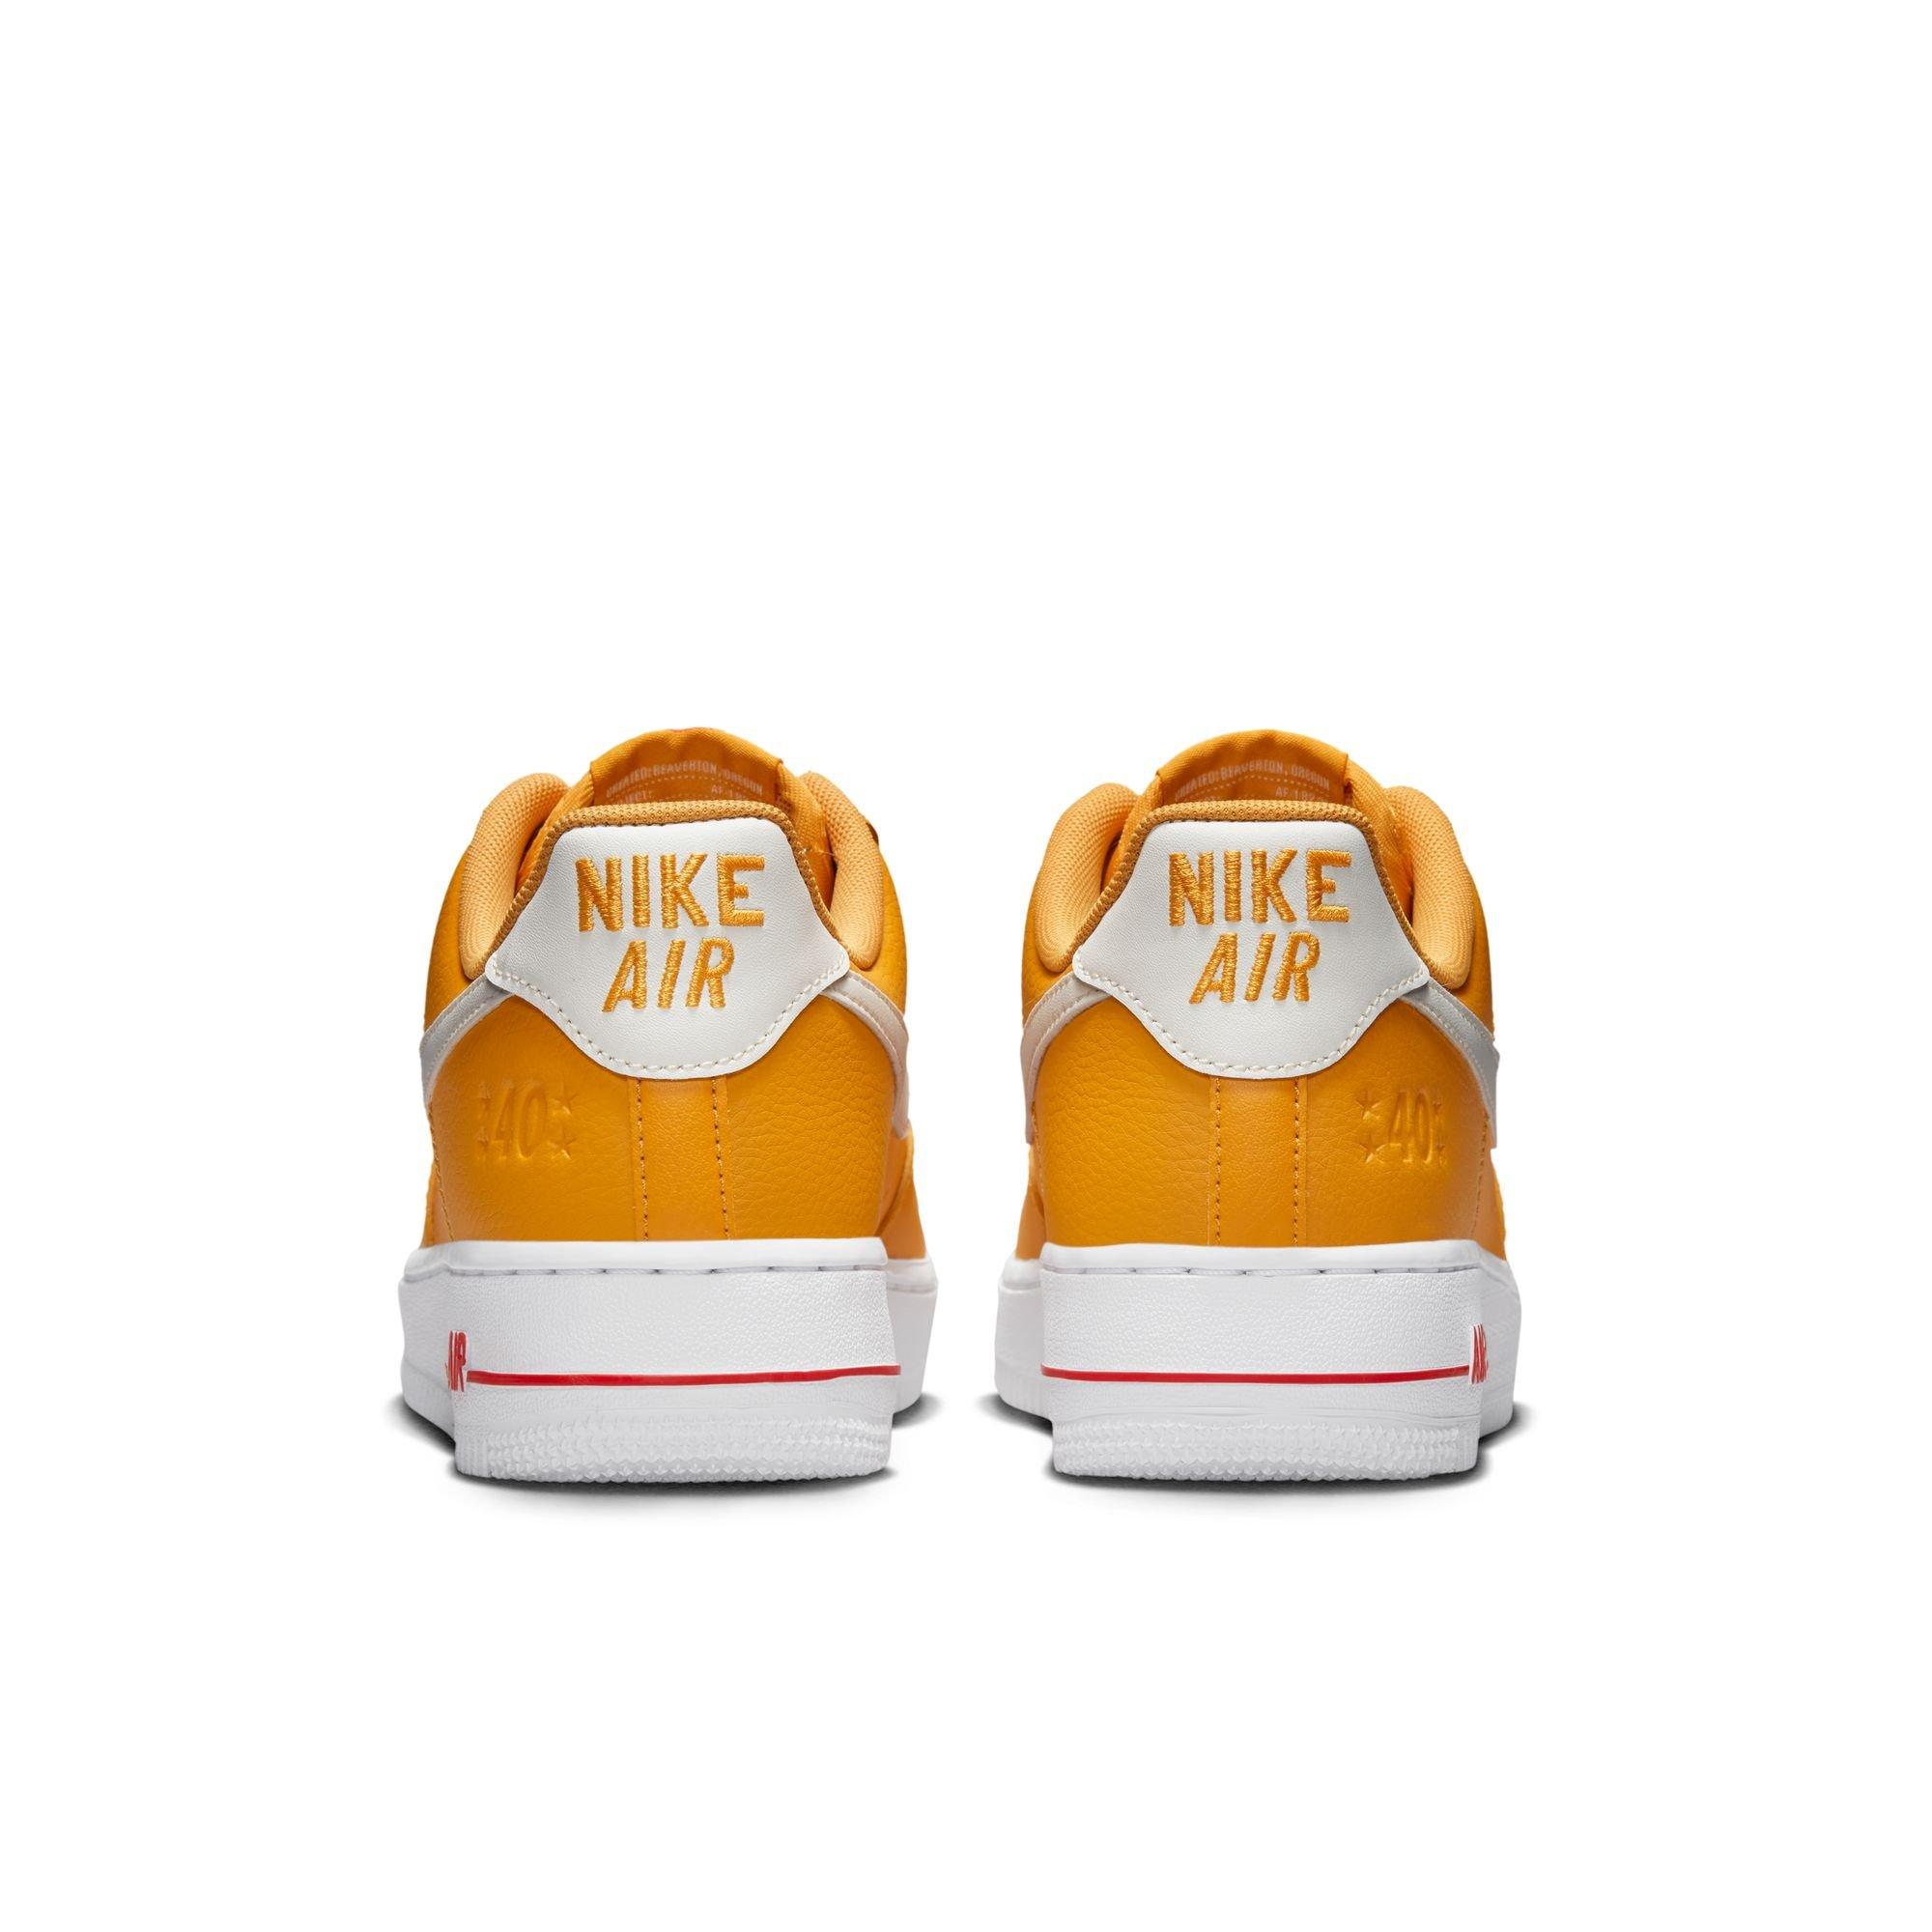 Hibbett on X: Cool neutrals by Nike ✔️ 📸 @hibbettjenningsmo